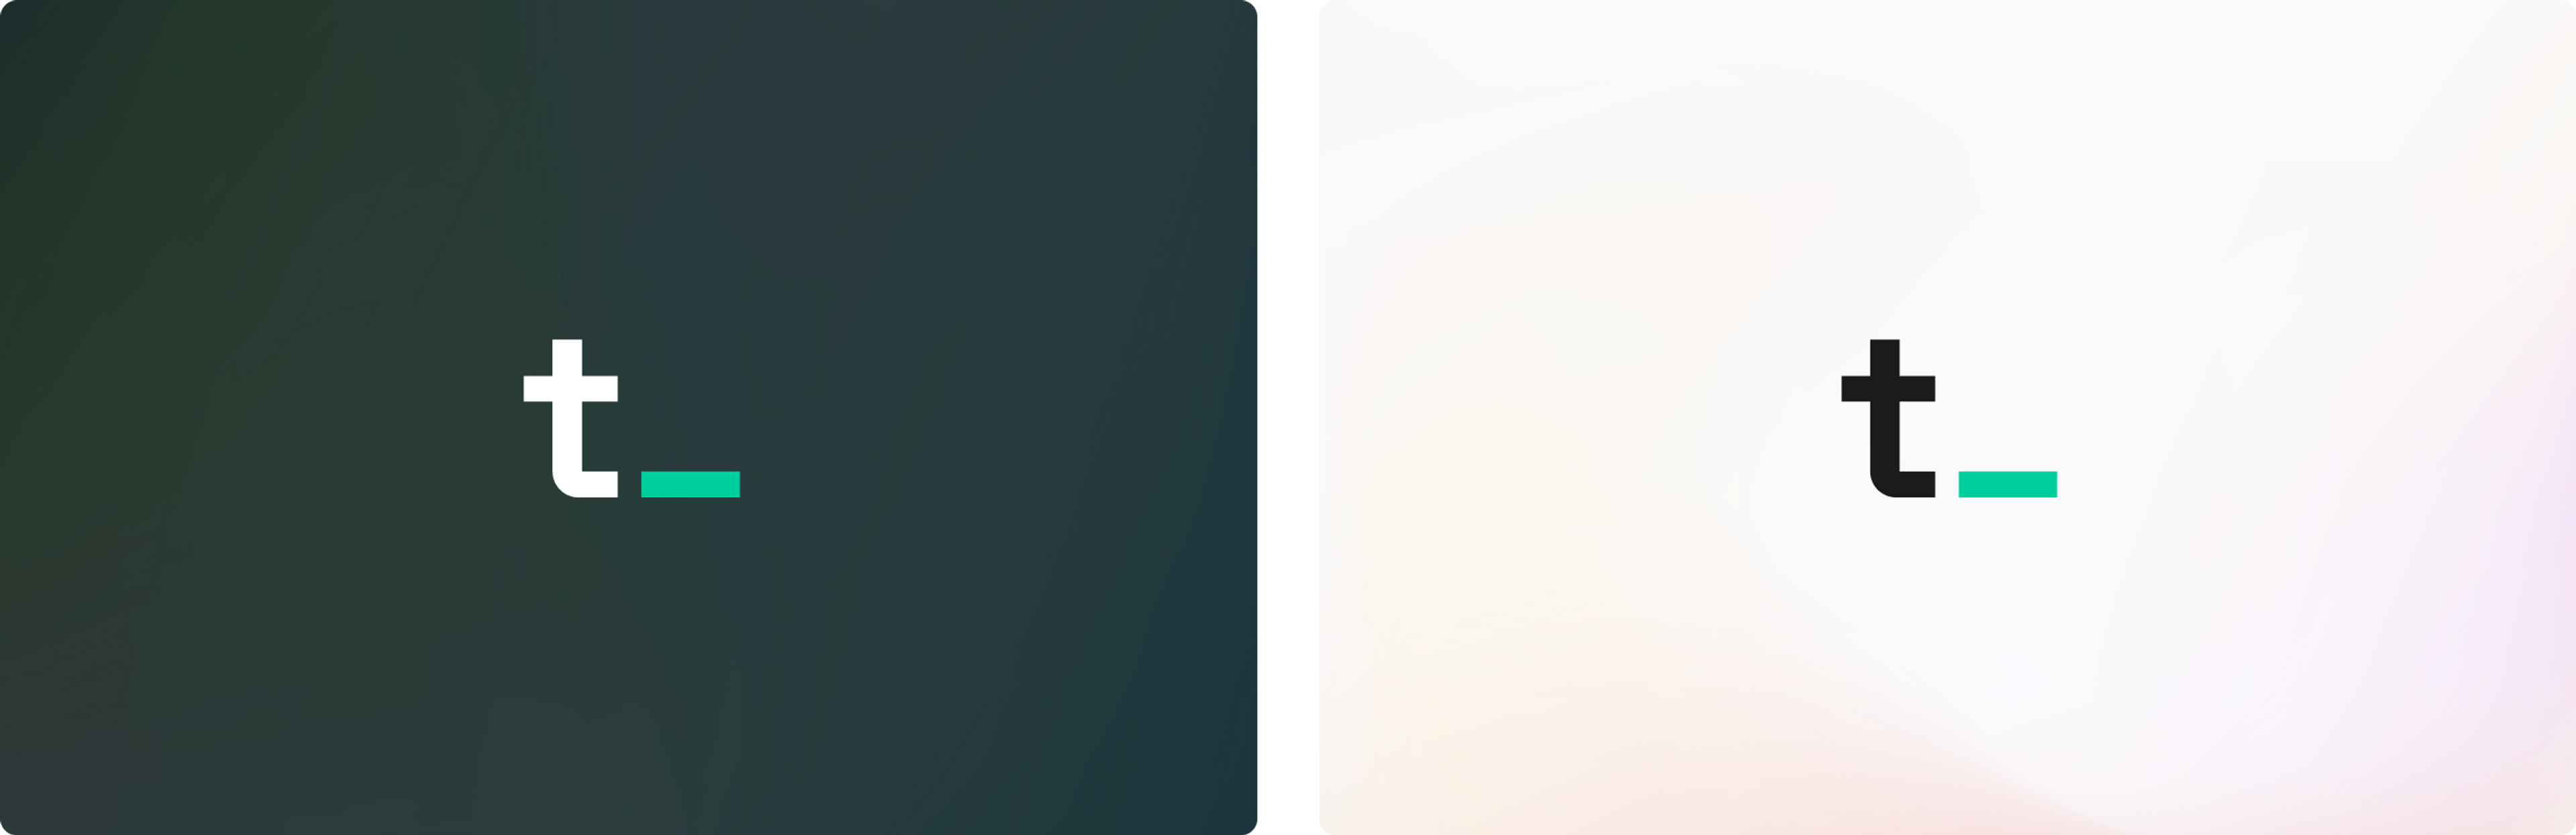 Image of light Token Terminal symbol on dark background and dark Token Terminal symbol on light background